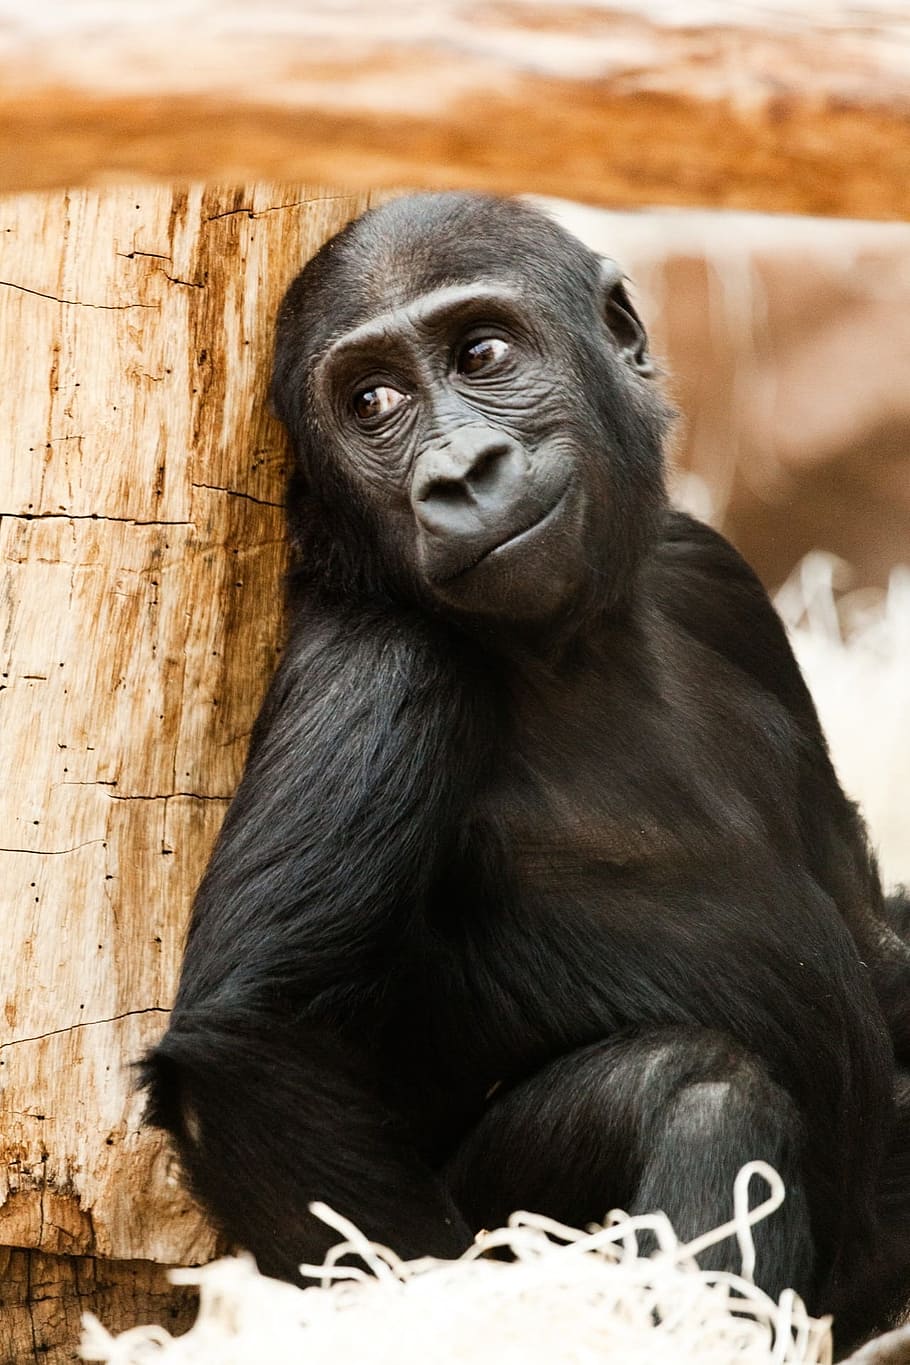 black, monkey, sitting, log, baby, animal, gorilla, africa, primate, ape